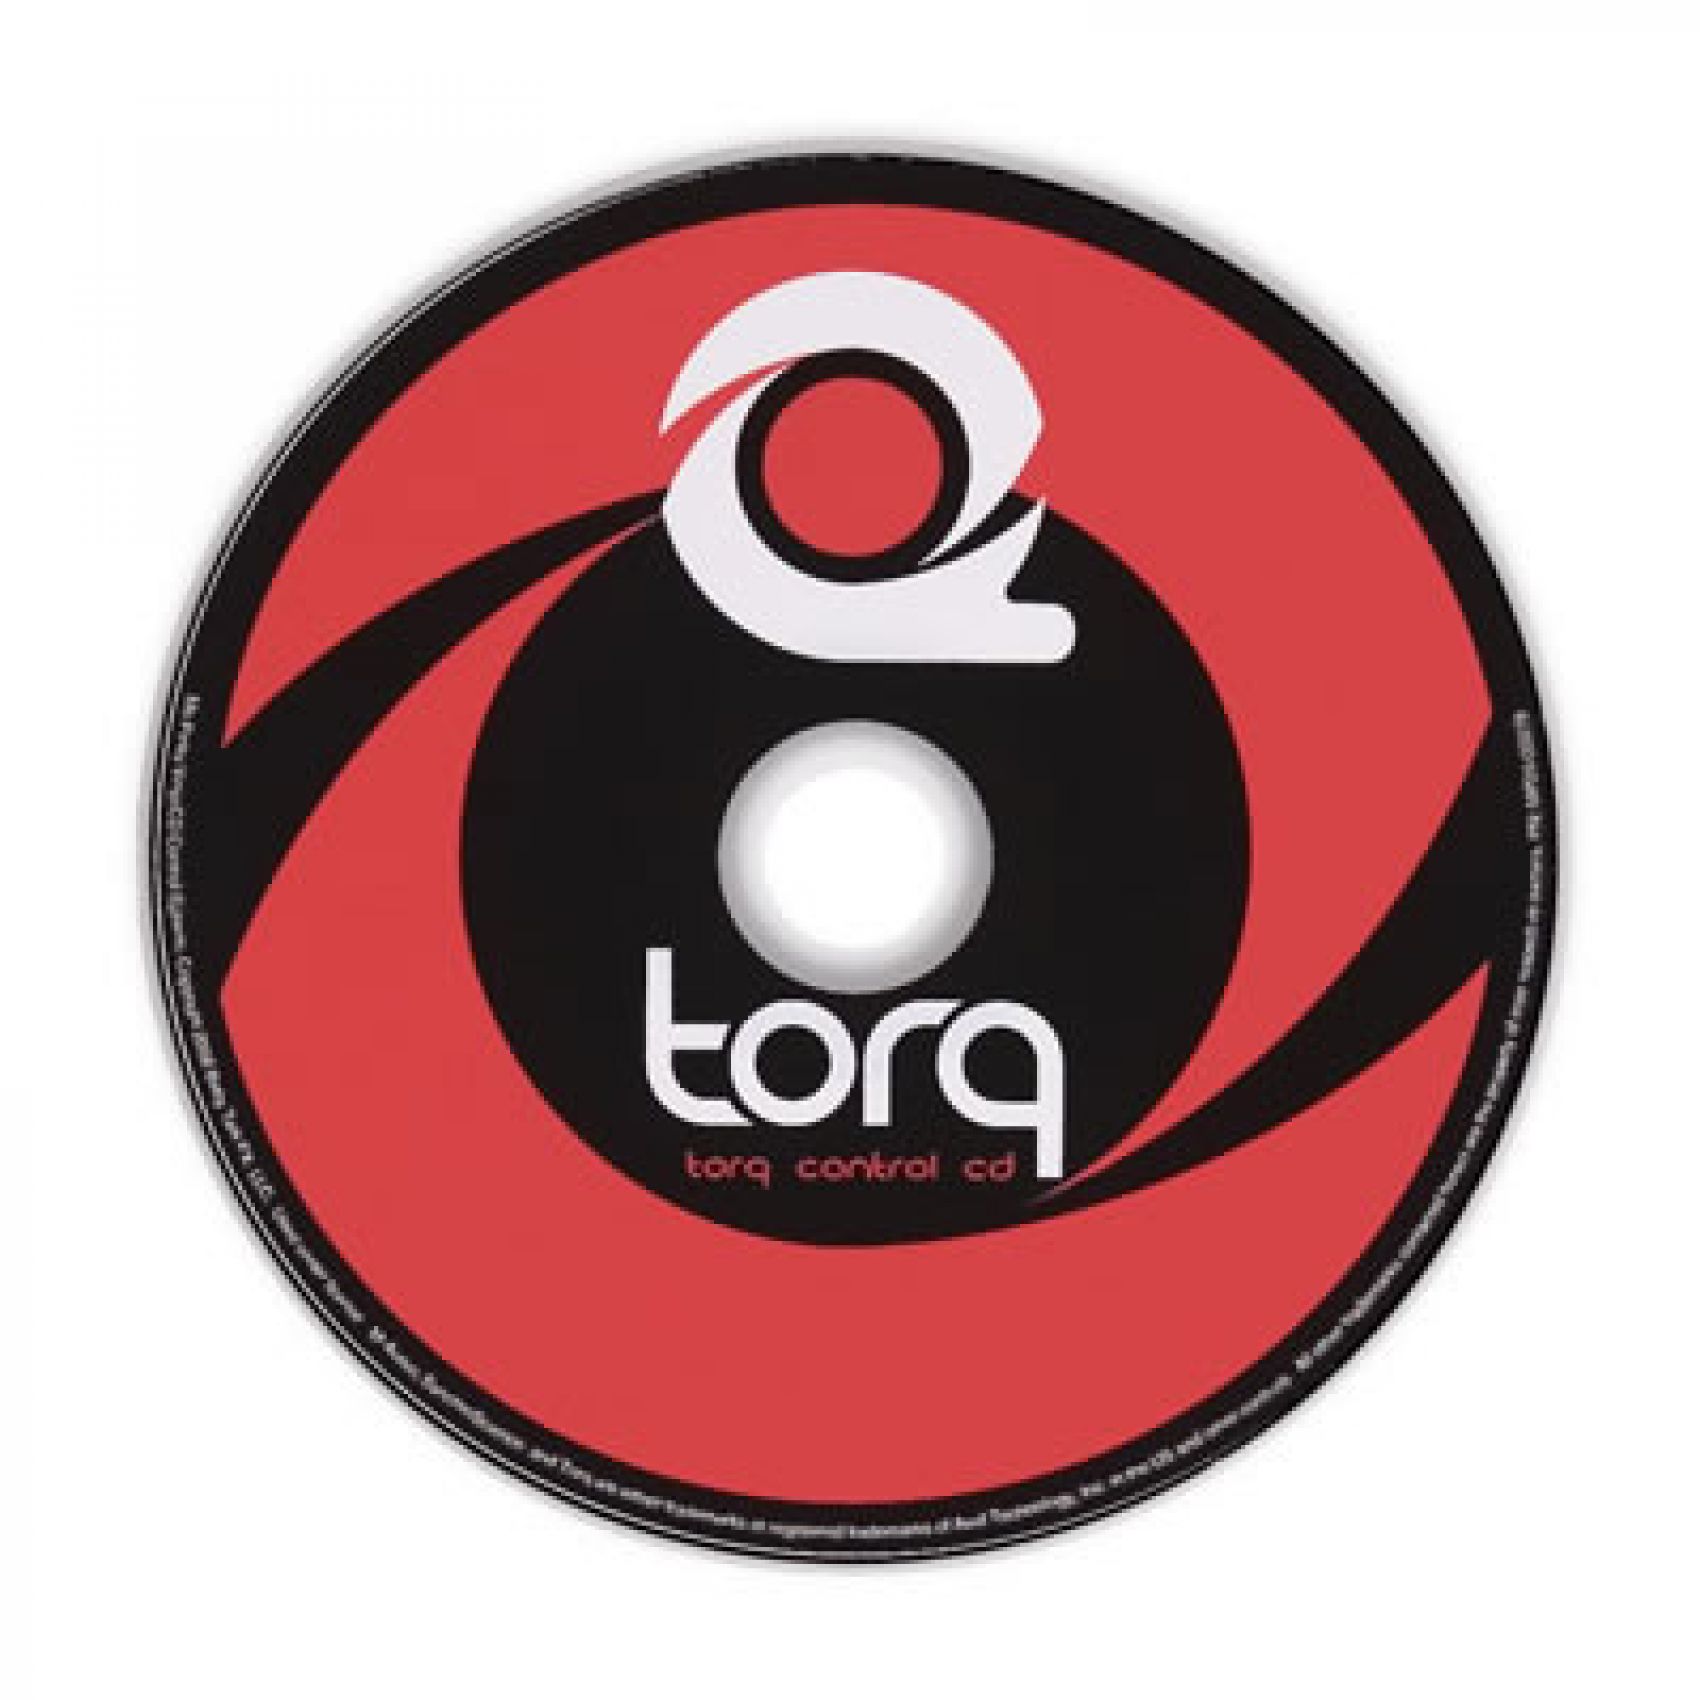 M-AUDIO TORQ CONTROL CD - CD PER TORQ